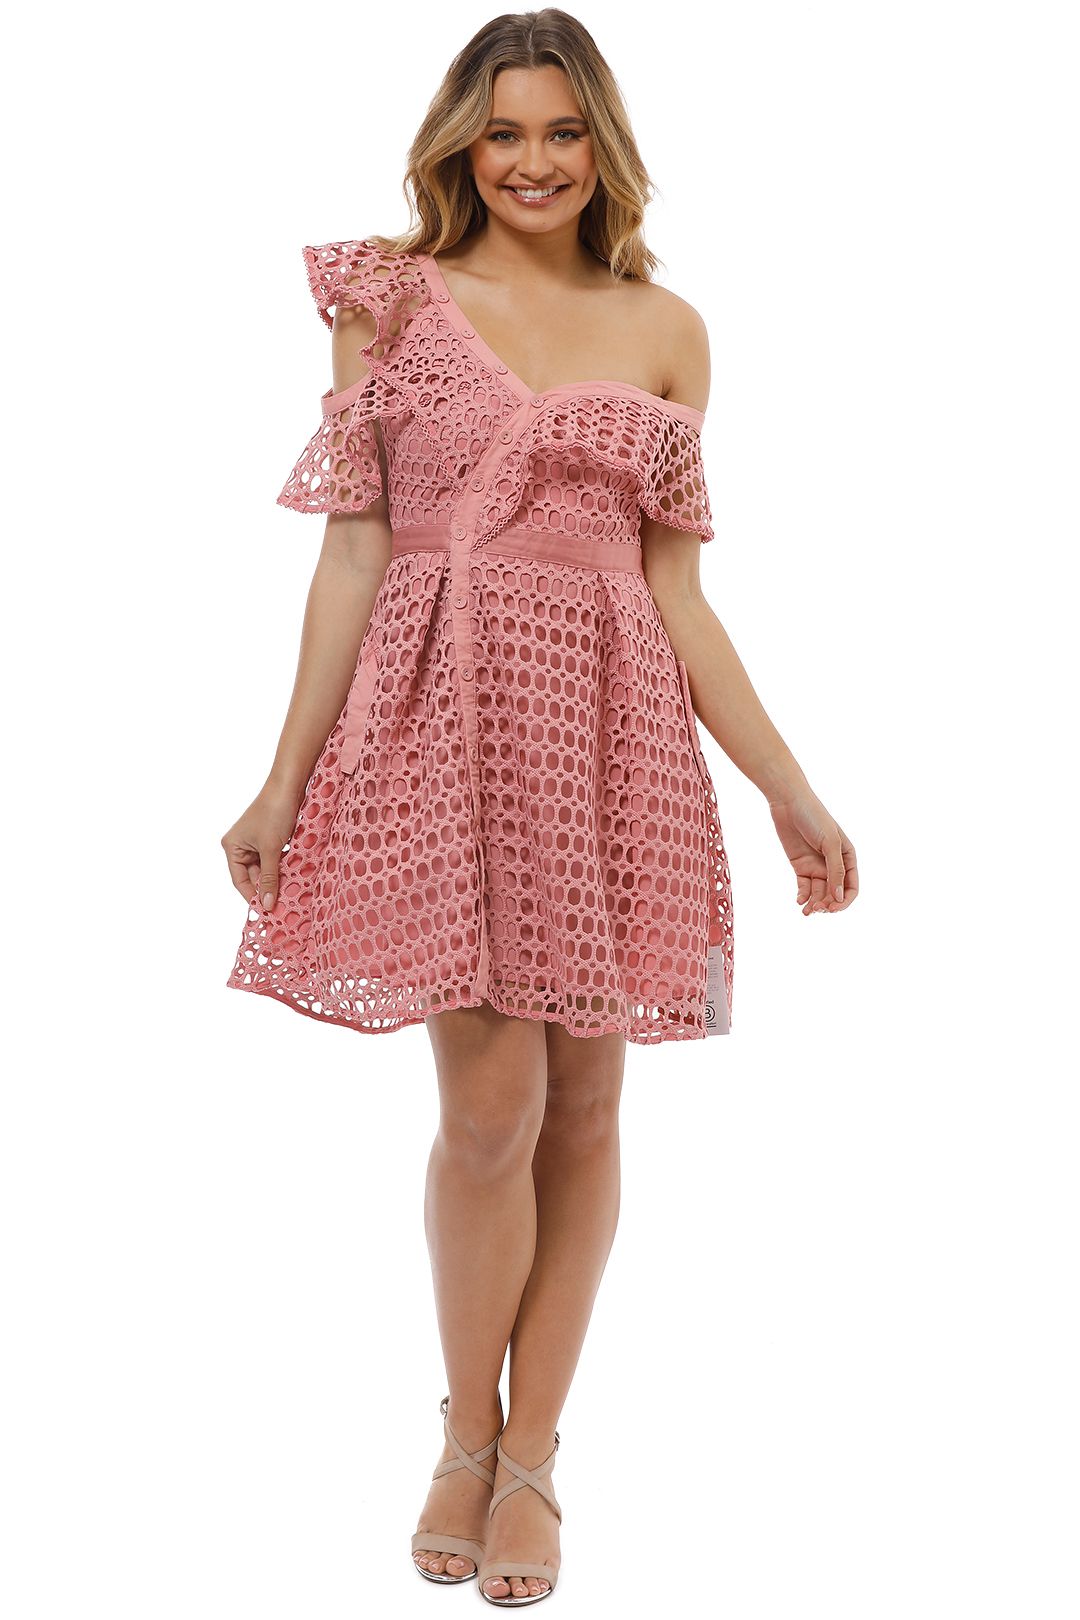 Self Portrait - Lace Frill Mini Dress - Pink - Front 